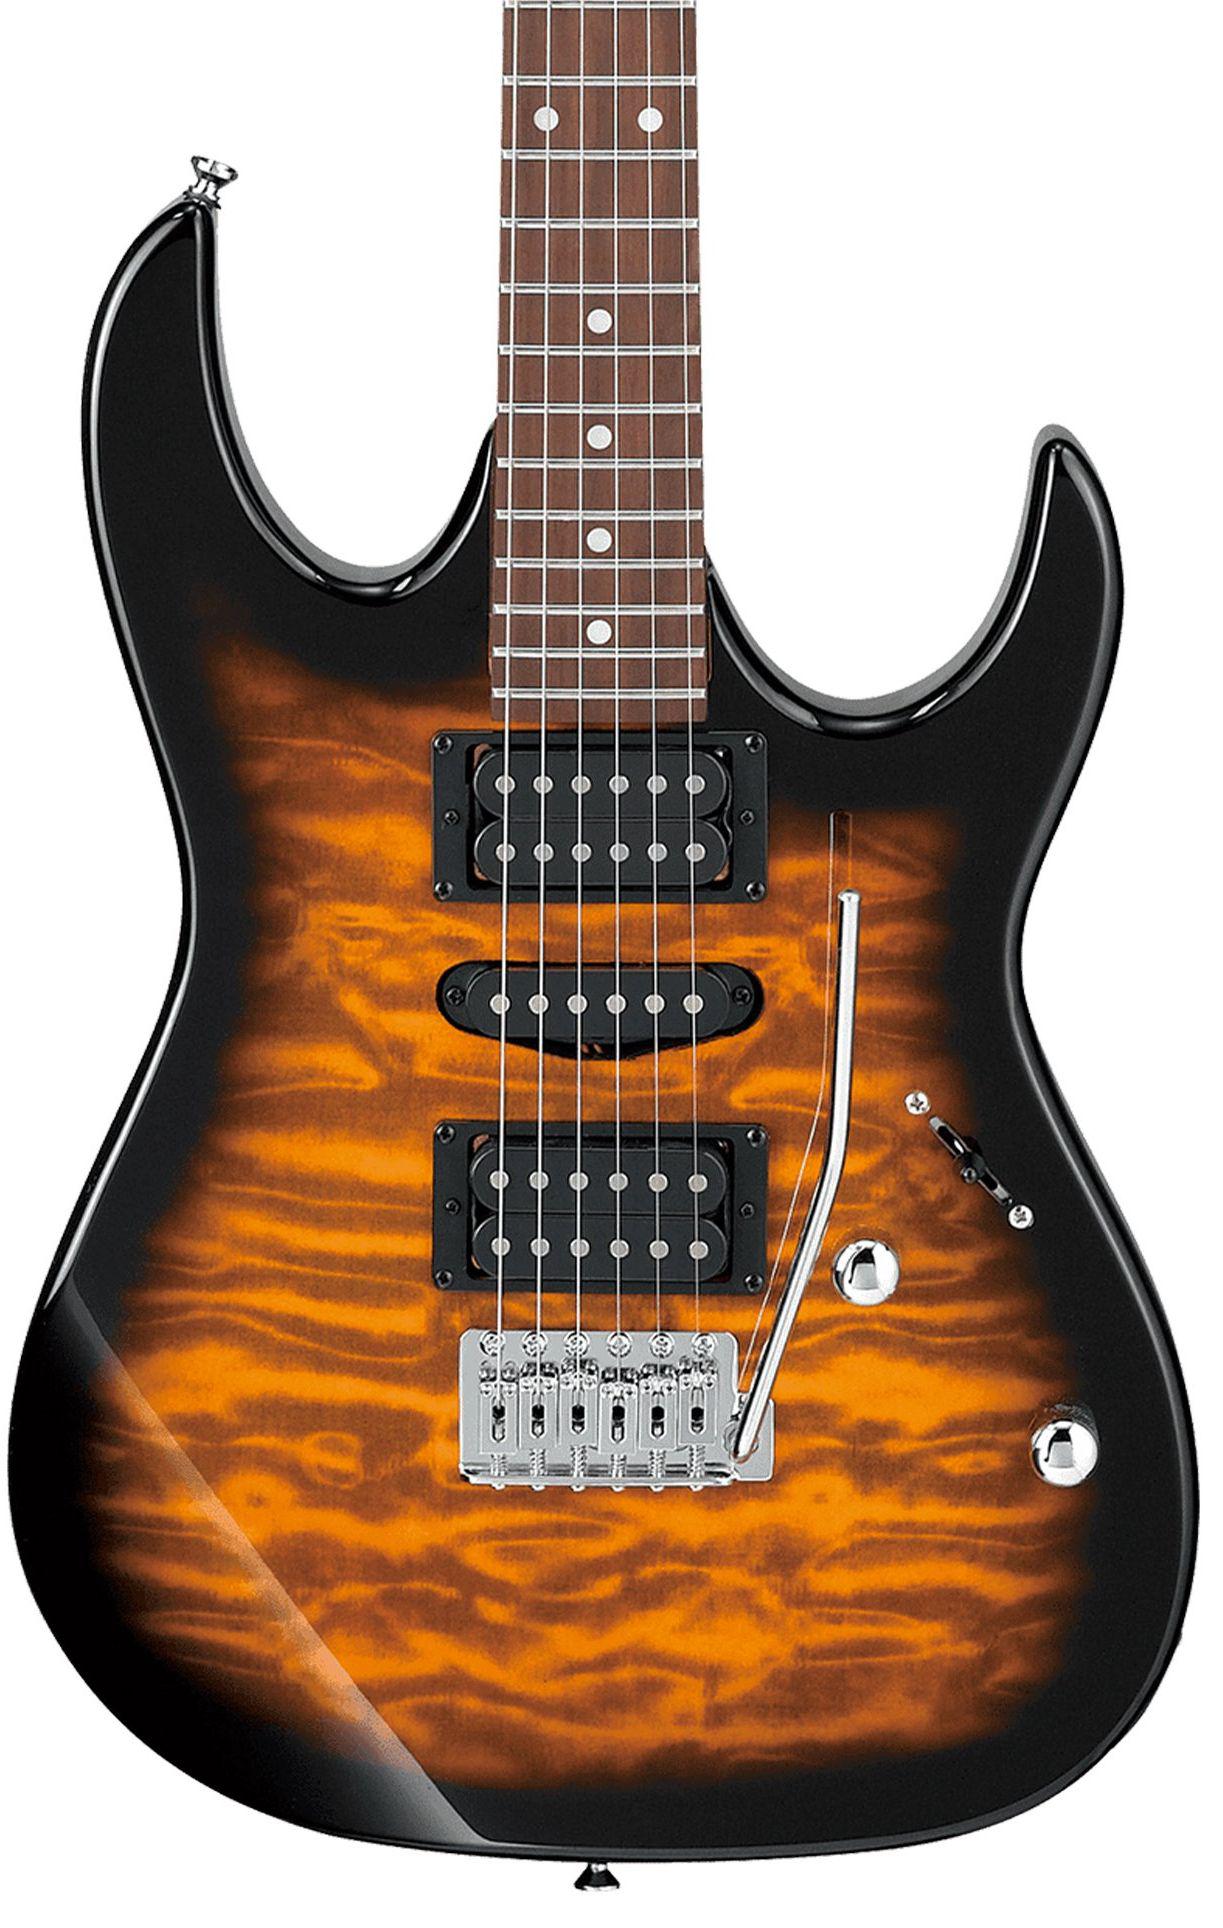 Ibañez - Guitarra Eléctrica GIO RG, Color: Ambar con Negro Mod.GRX70QA-SB_34